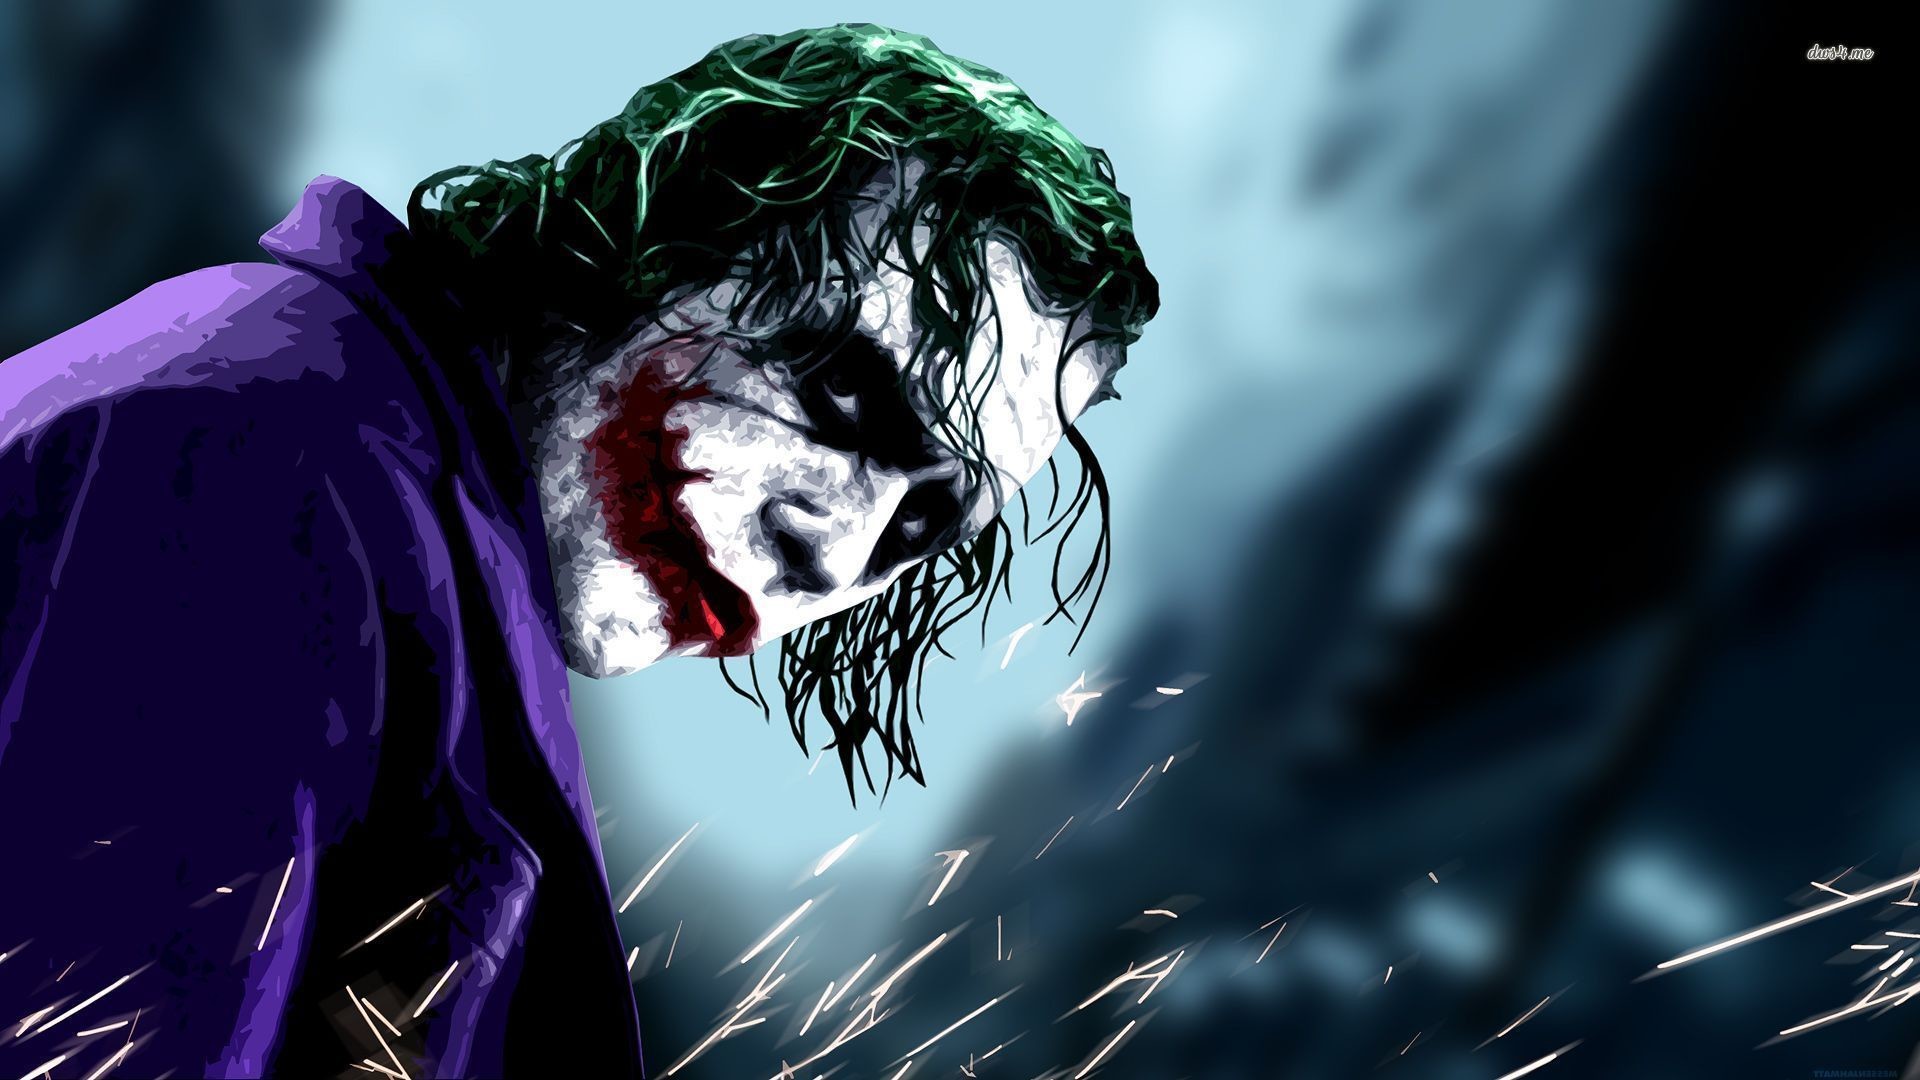 1920x1080 The Joker - The Dark Knight wallpaper - Movie wallpapers - #20937